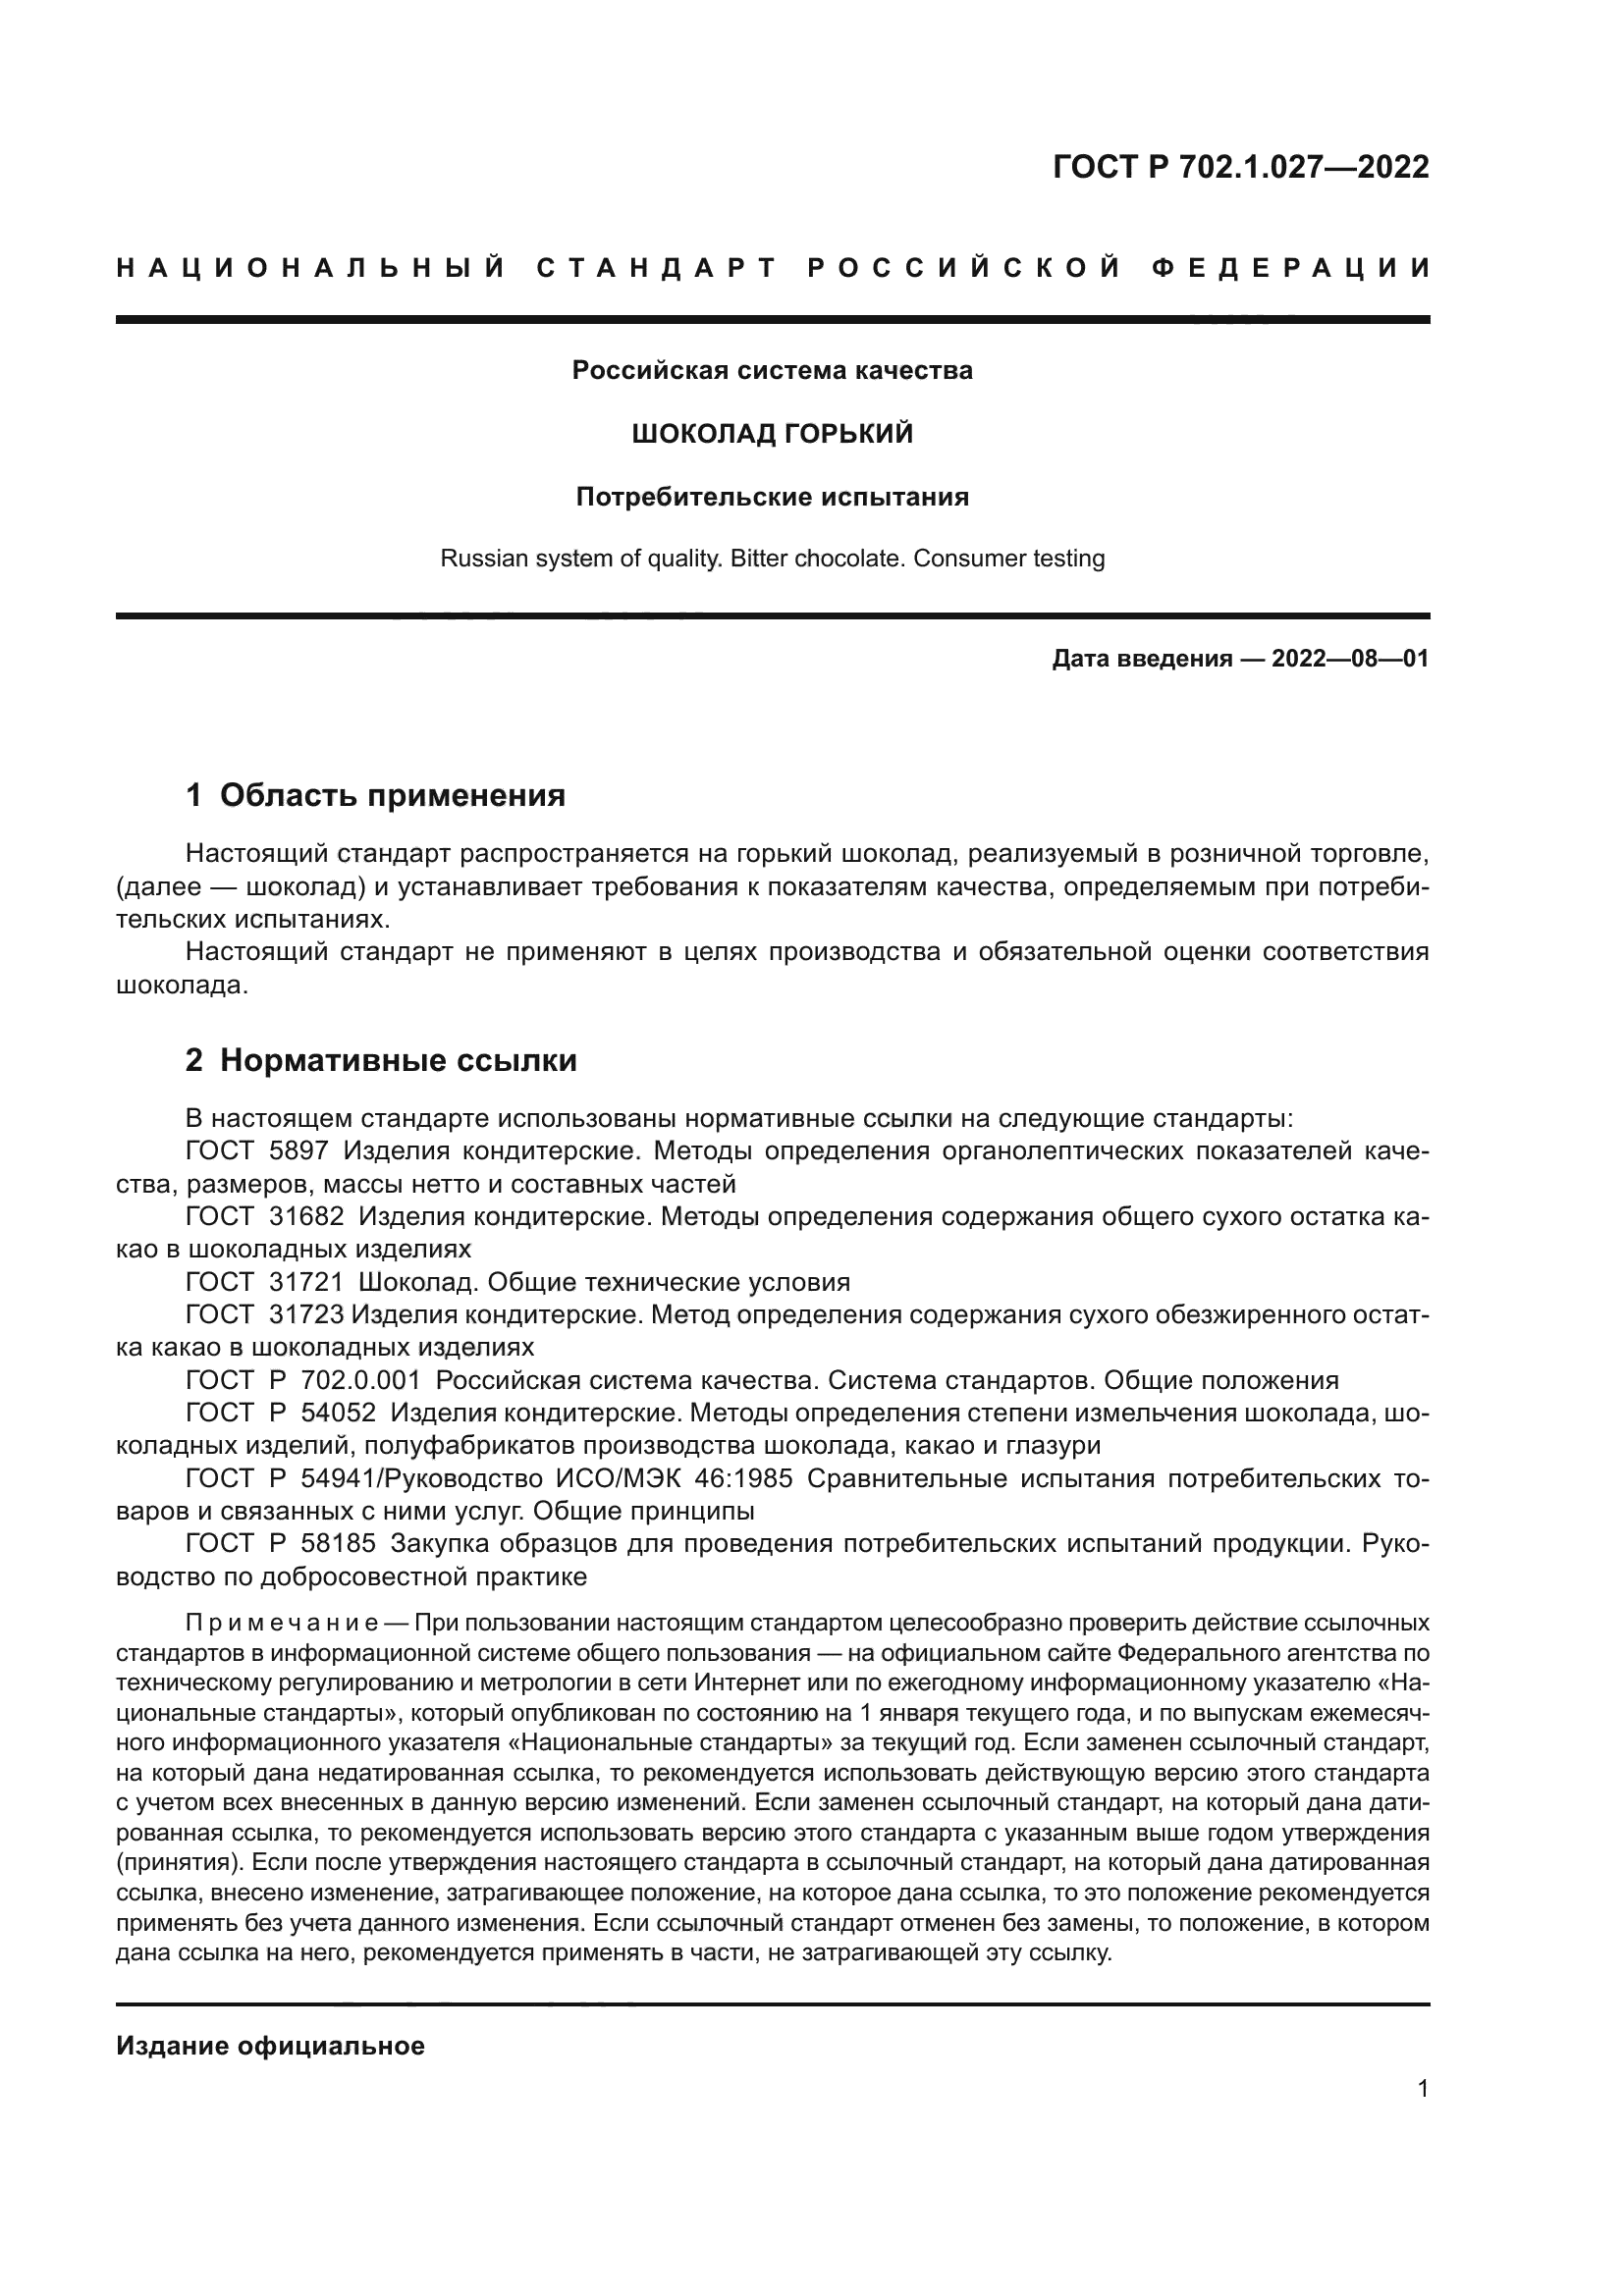 ГОСТ Р 702.1.027-2022